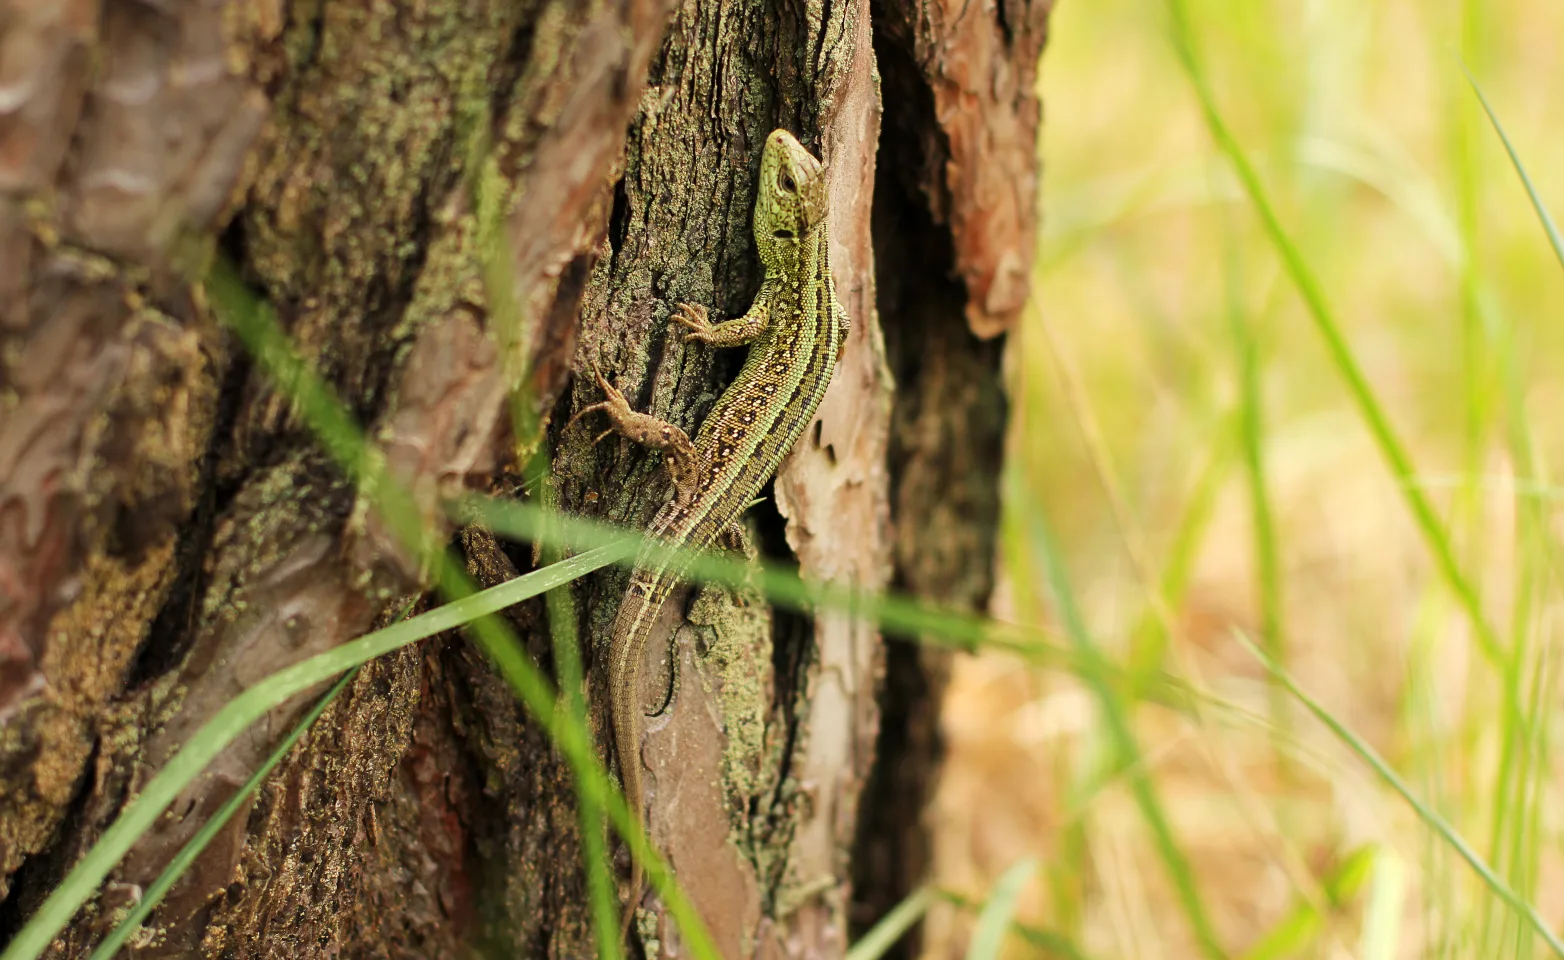 Lizard on a tree